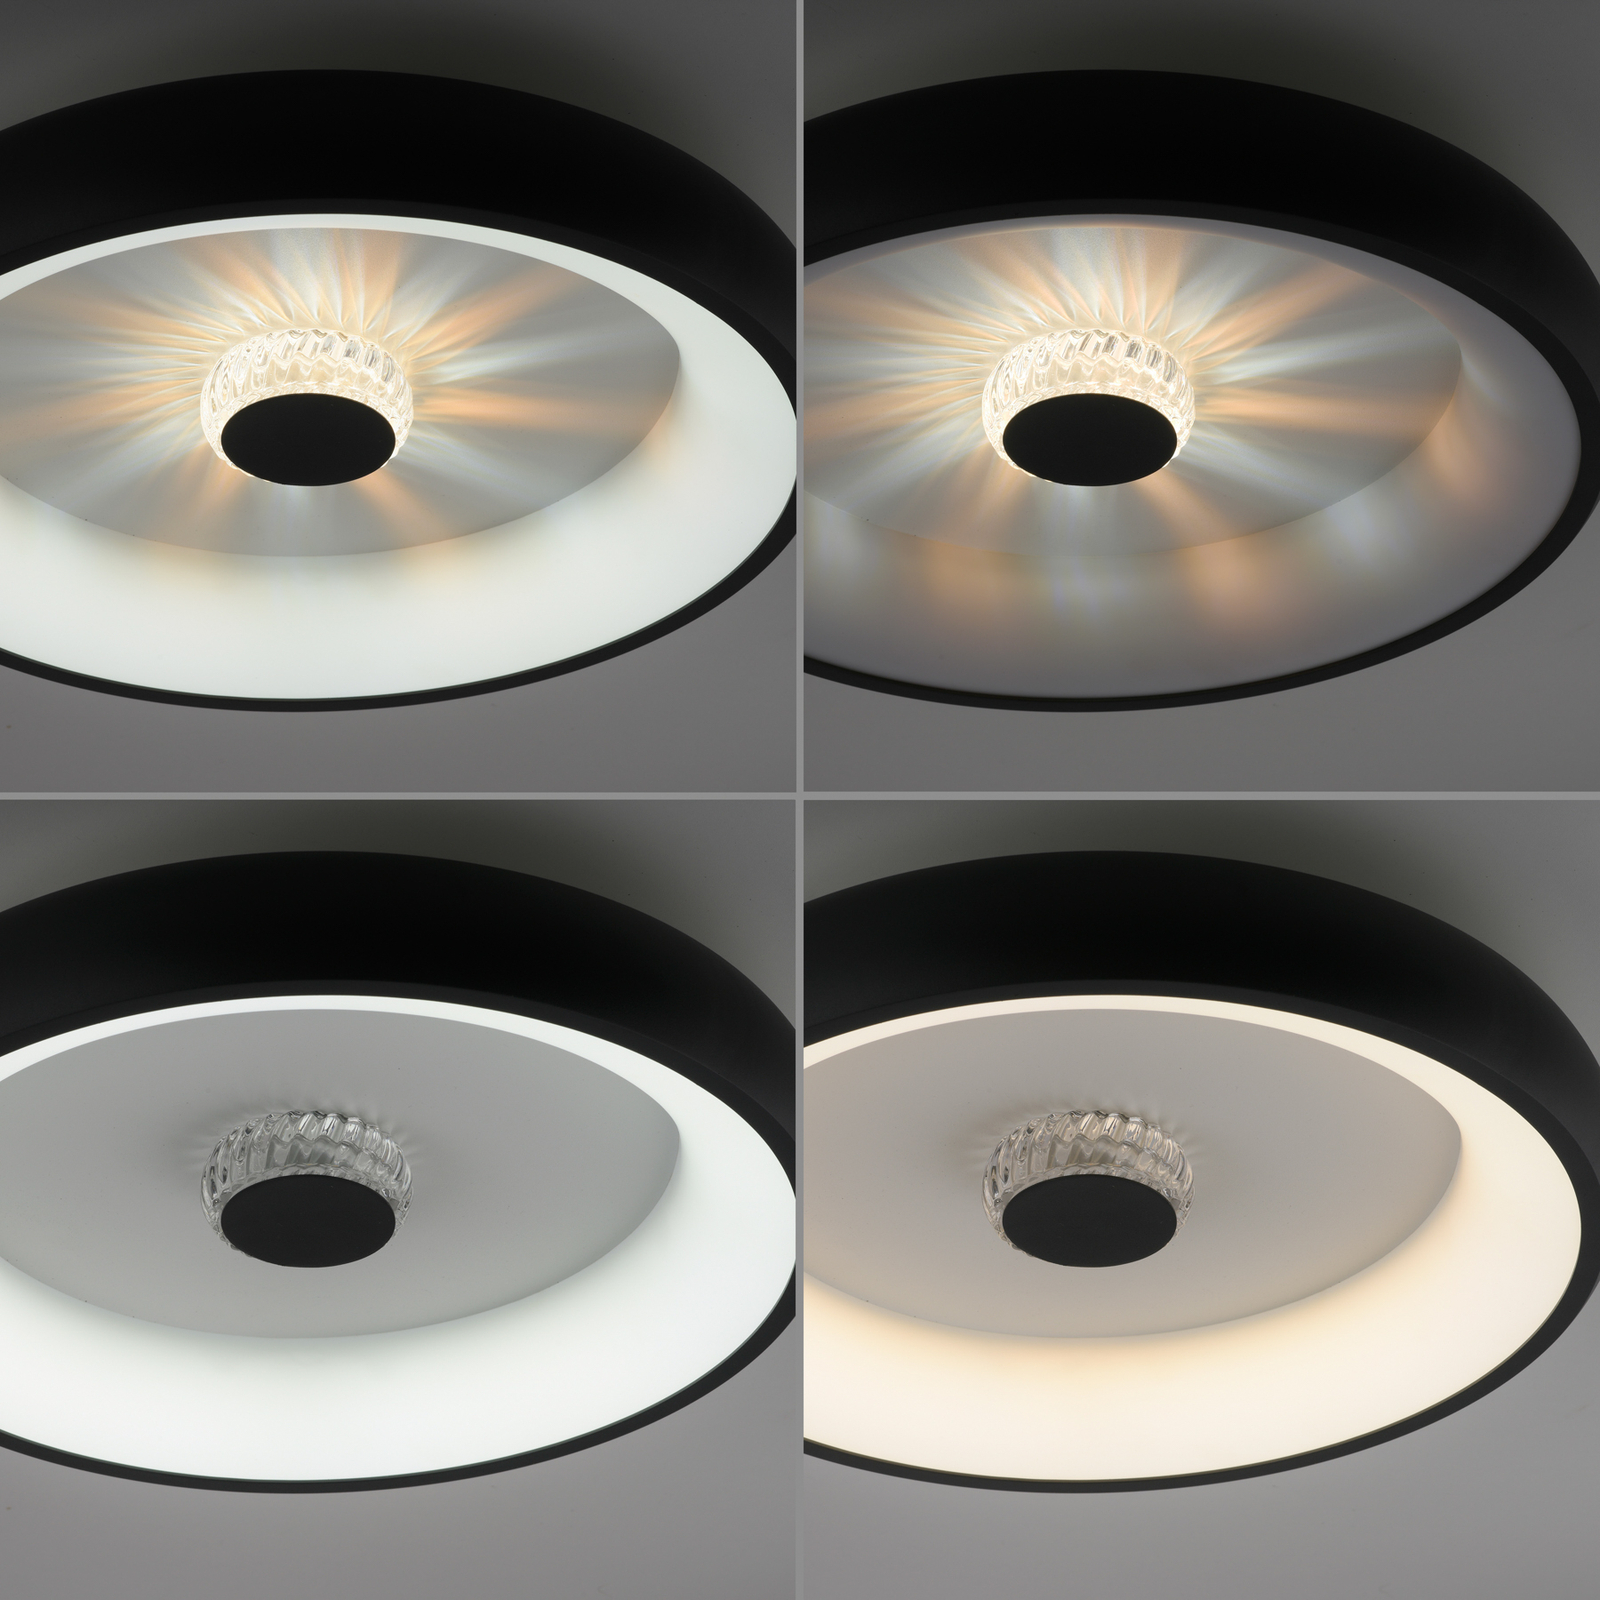 Vertigo LED stropné svietidlo, CCT, Ø 46,5 cm, čierna